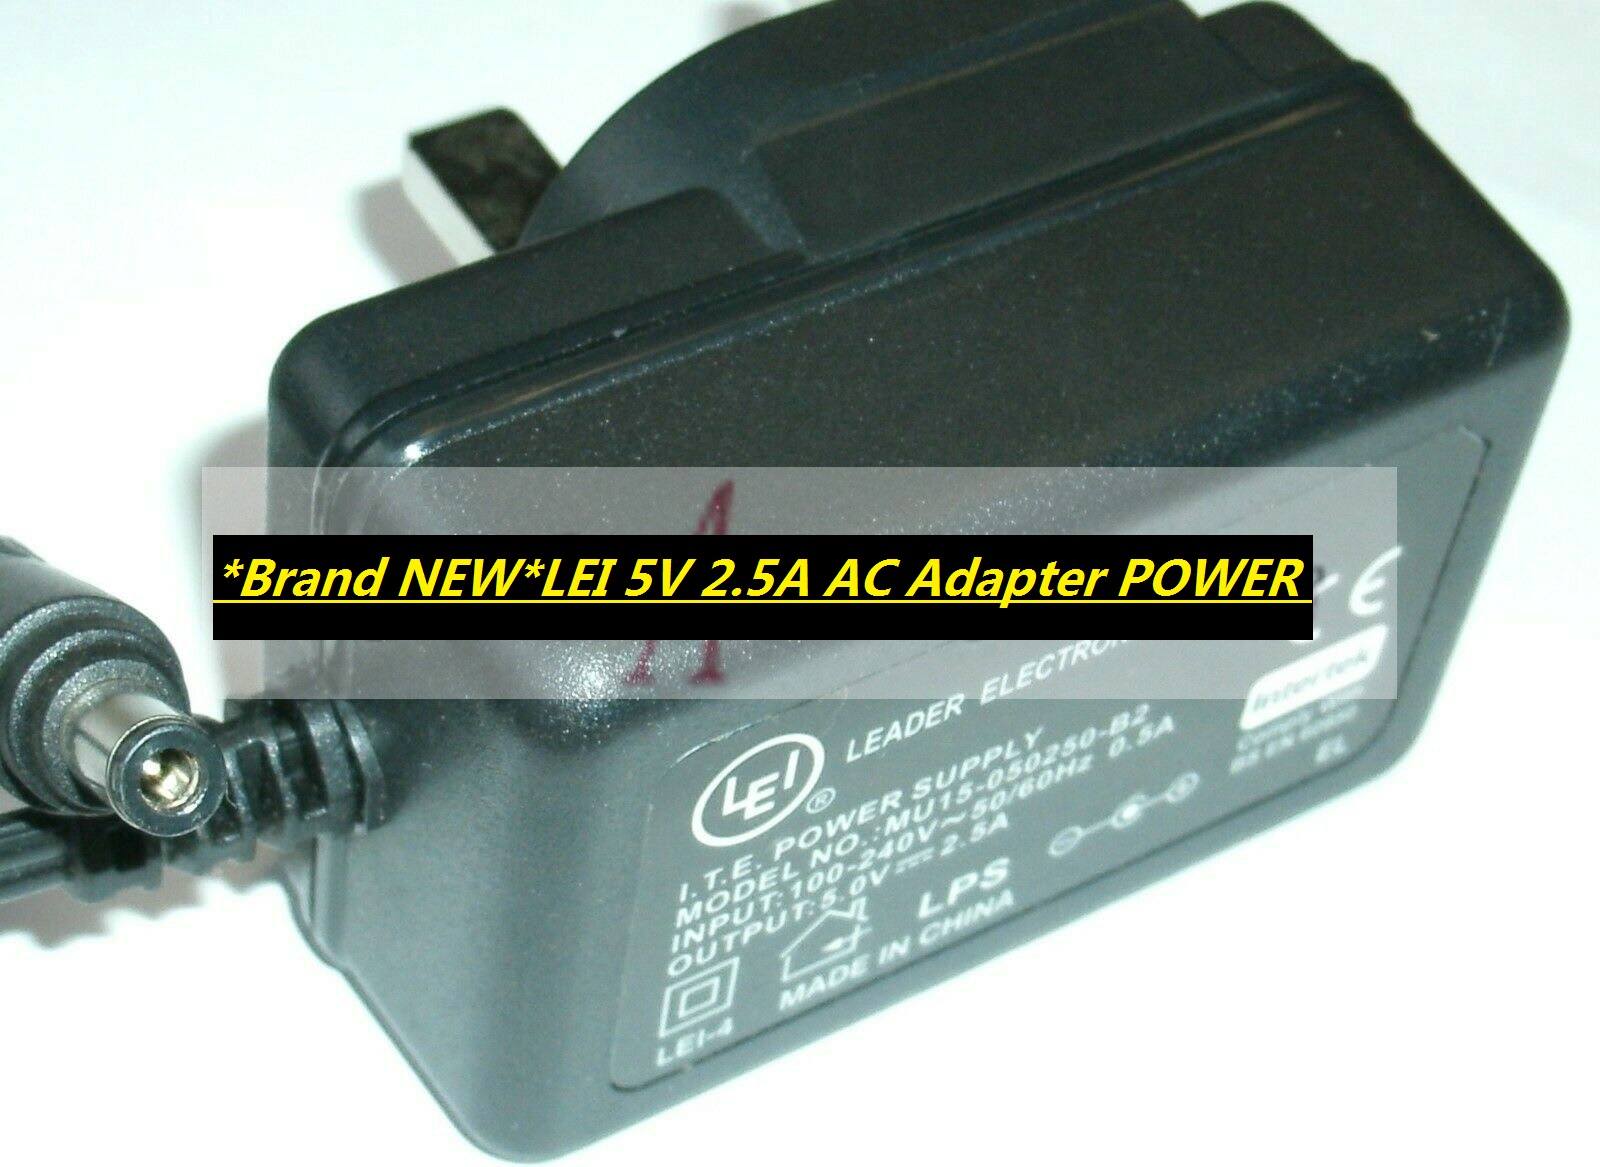 *Brand NEW*LEI MU15-050250-B2 5V 2.5A AC Adapter POWER SUPPLY